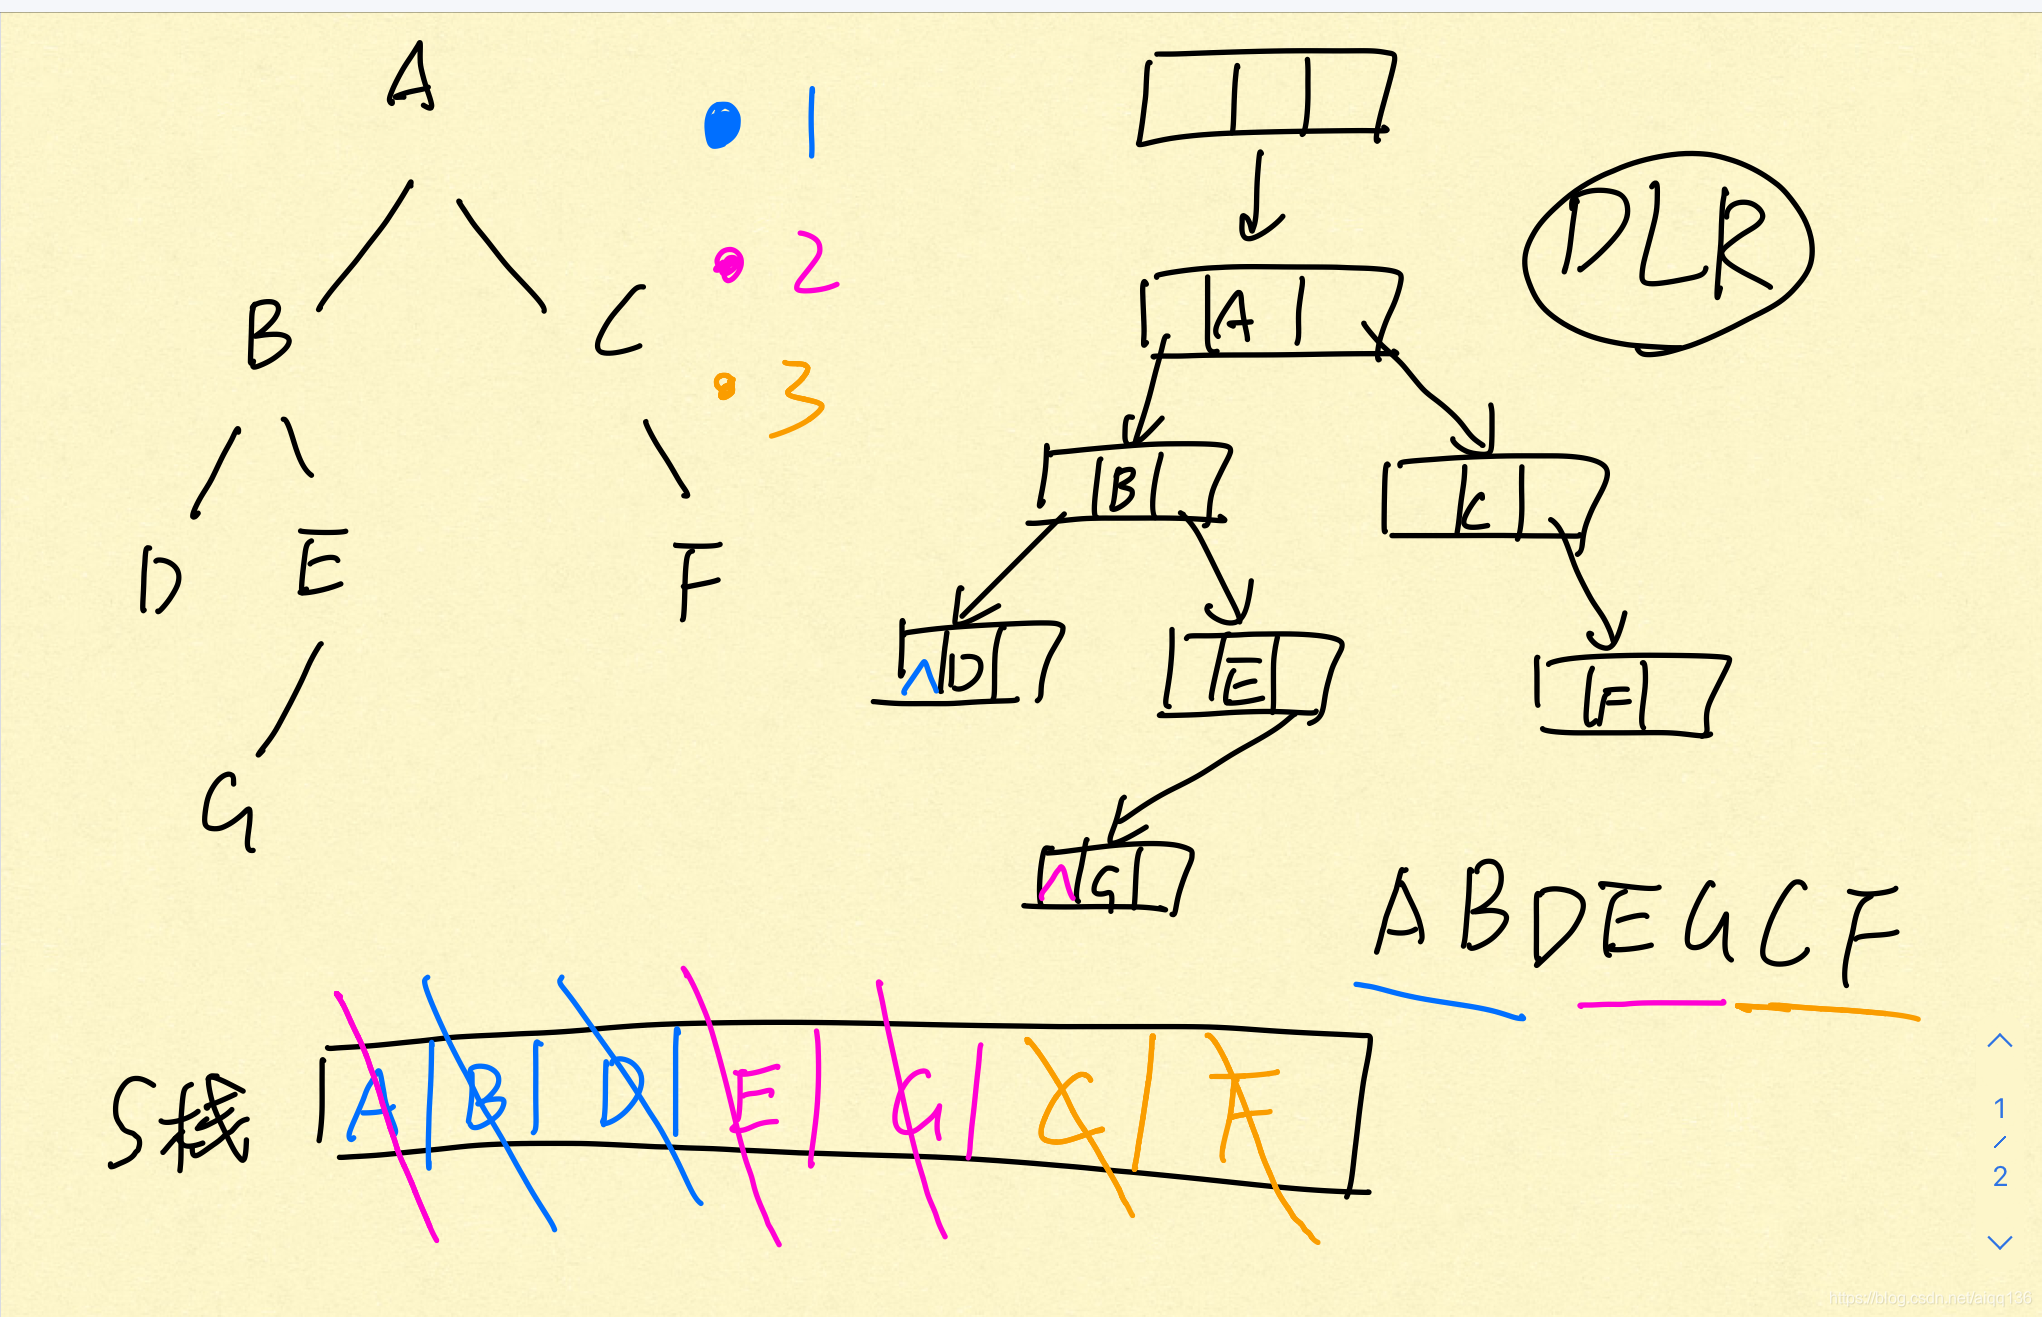 C语言数据结构-树和二叉树-先序遍历-已知二叉树按照二叉链表方式存储，利用栈的基本操作写出先序遍历非递归形式的算法